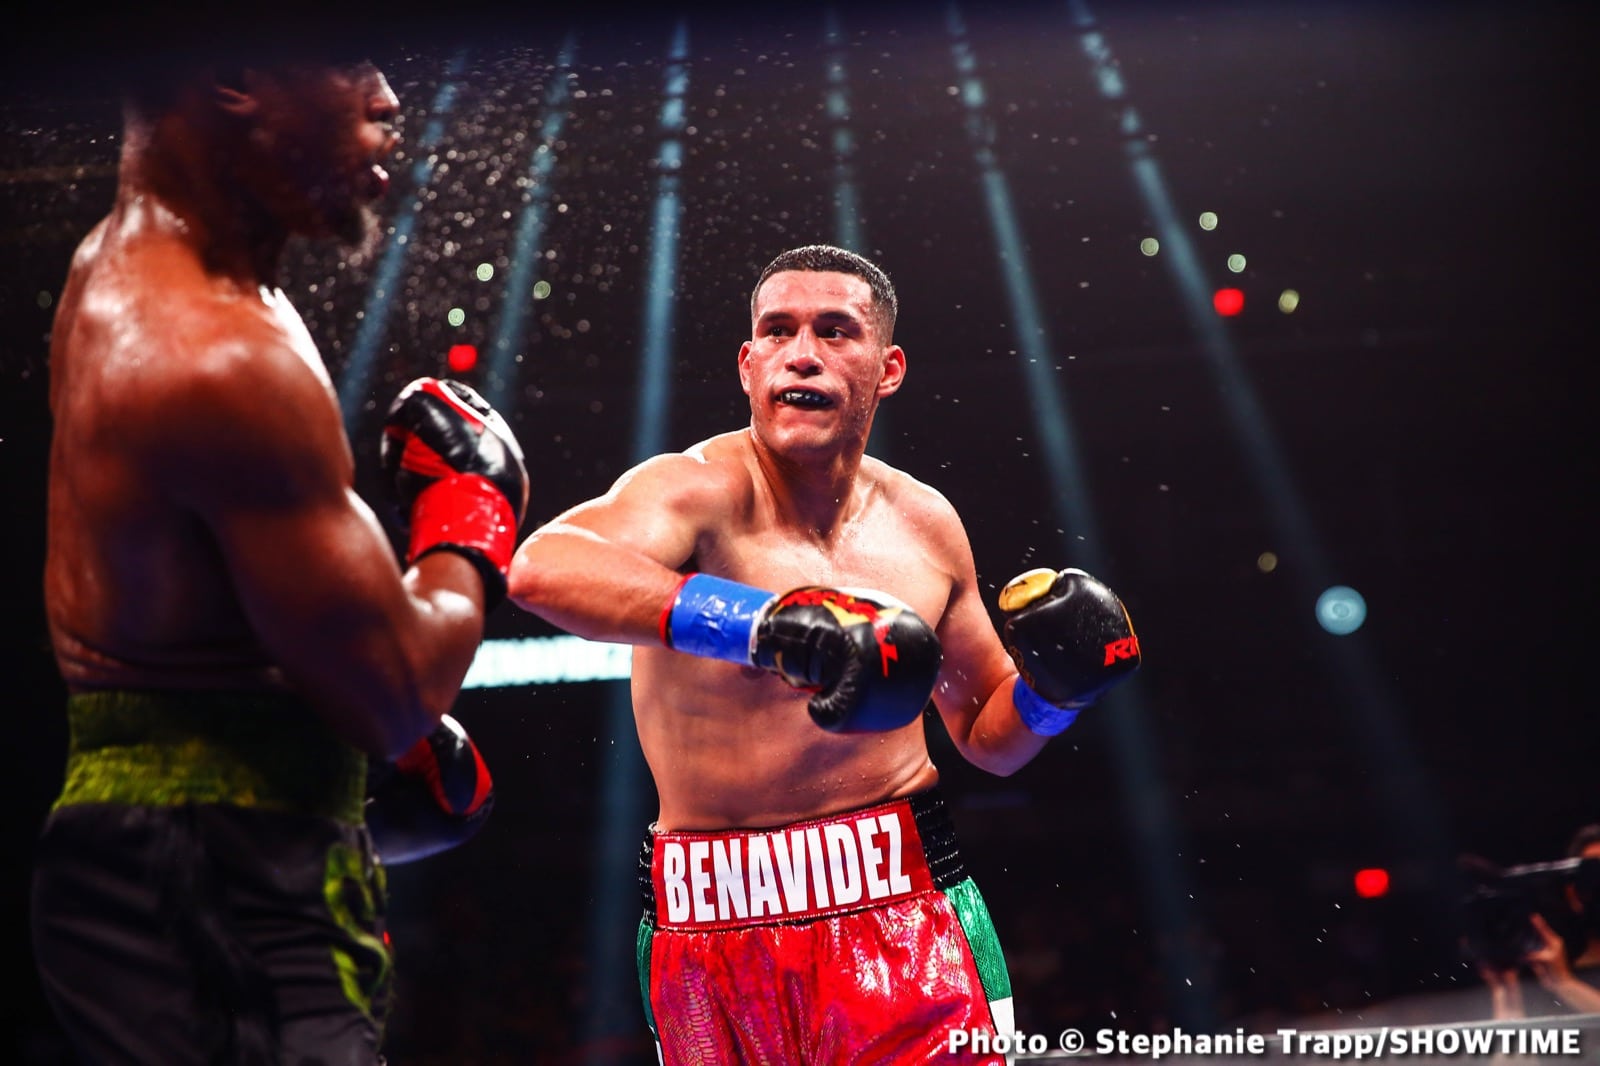 Jose Benavidez Jr. boxing image / photo